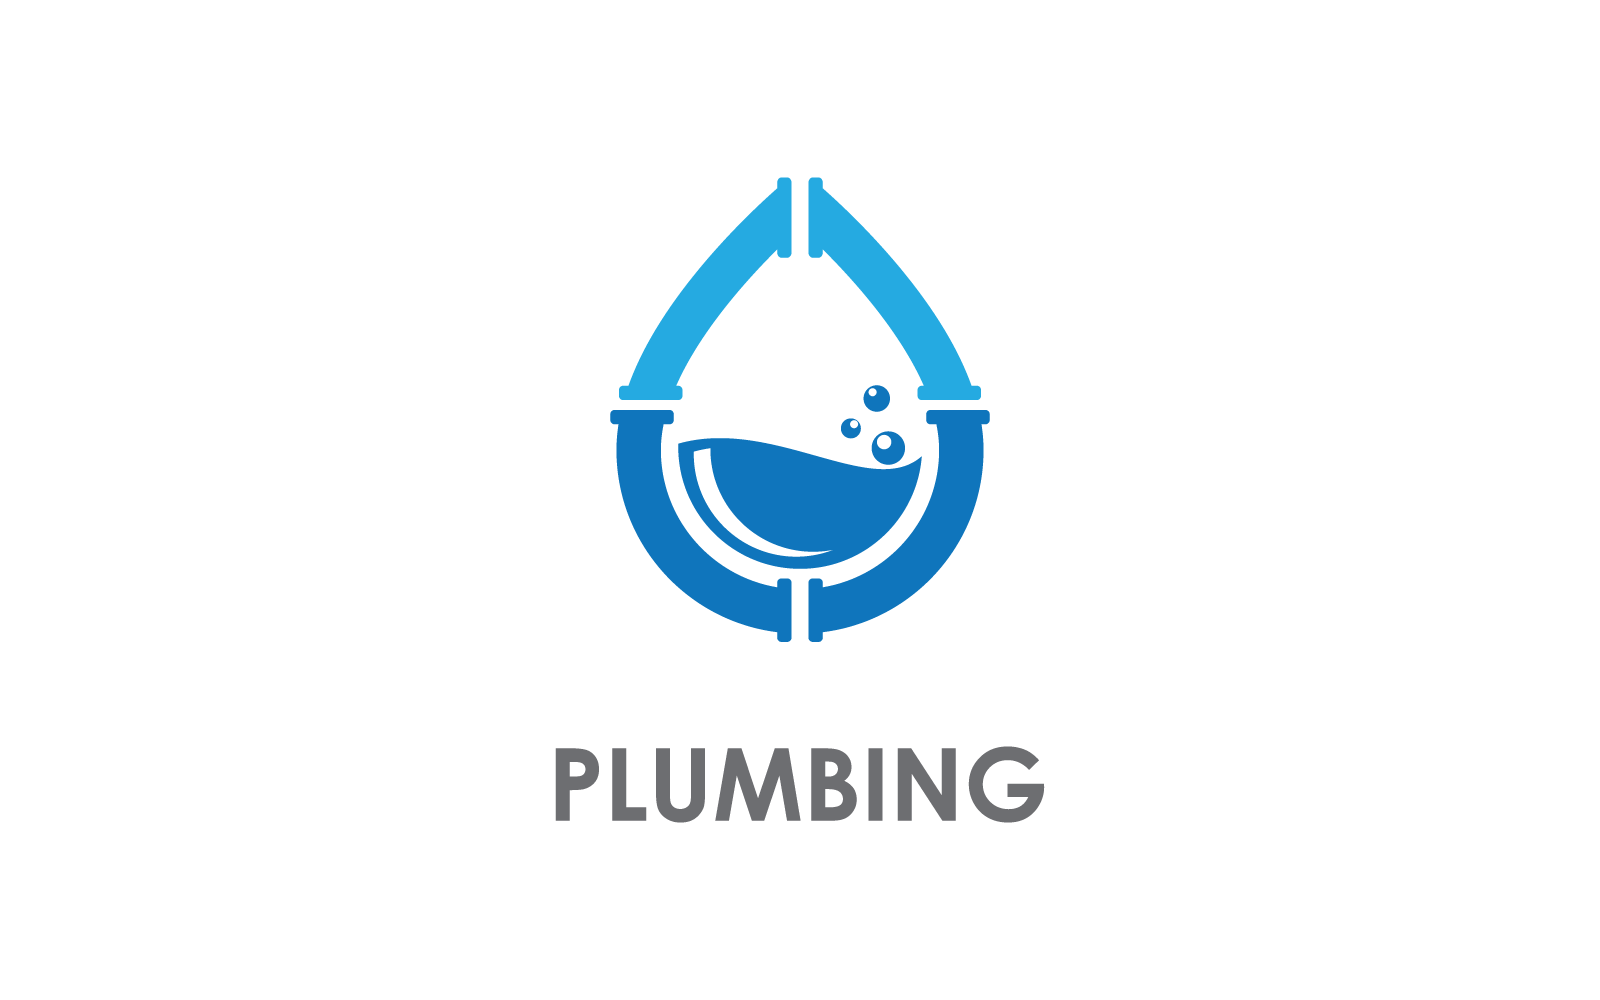 Plumbing logo design illustration template